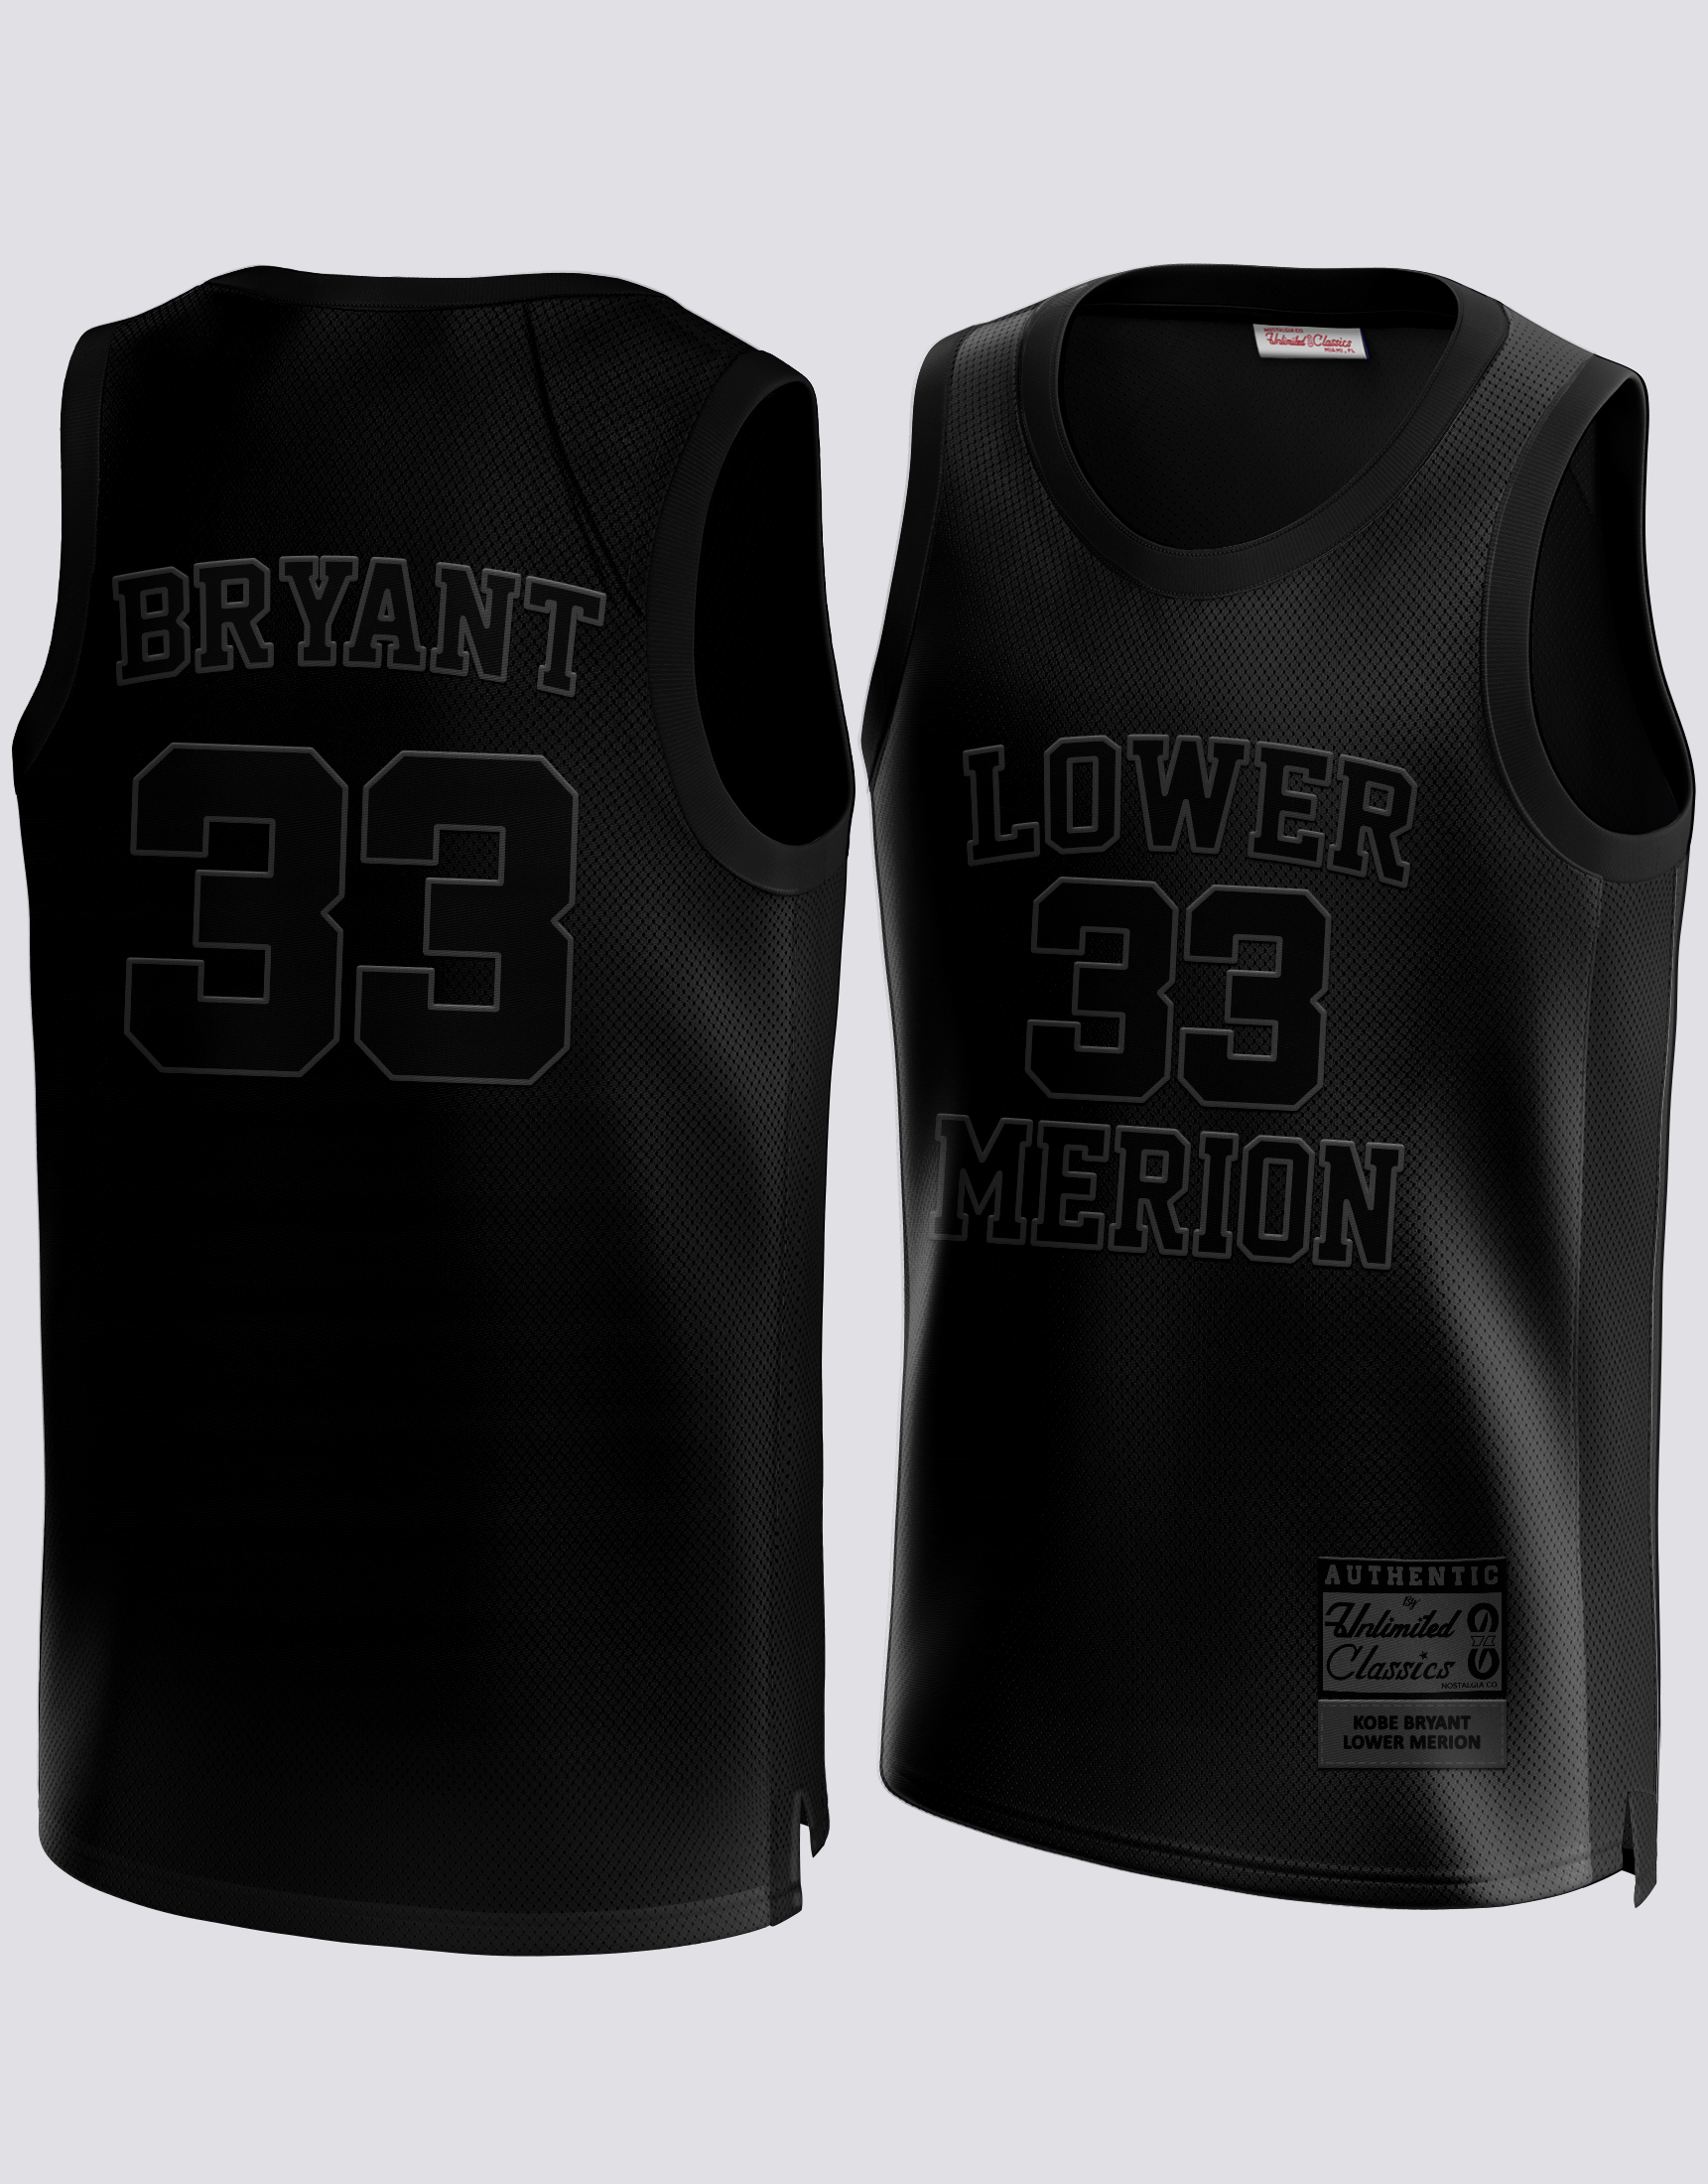 YOUTH Kobe Bryant #33 Lower Merion Basketball Jersey - S